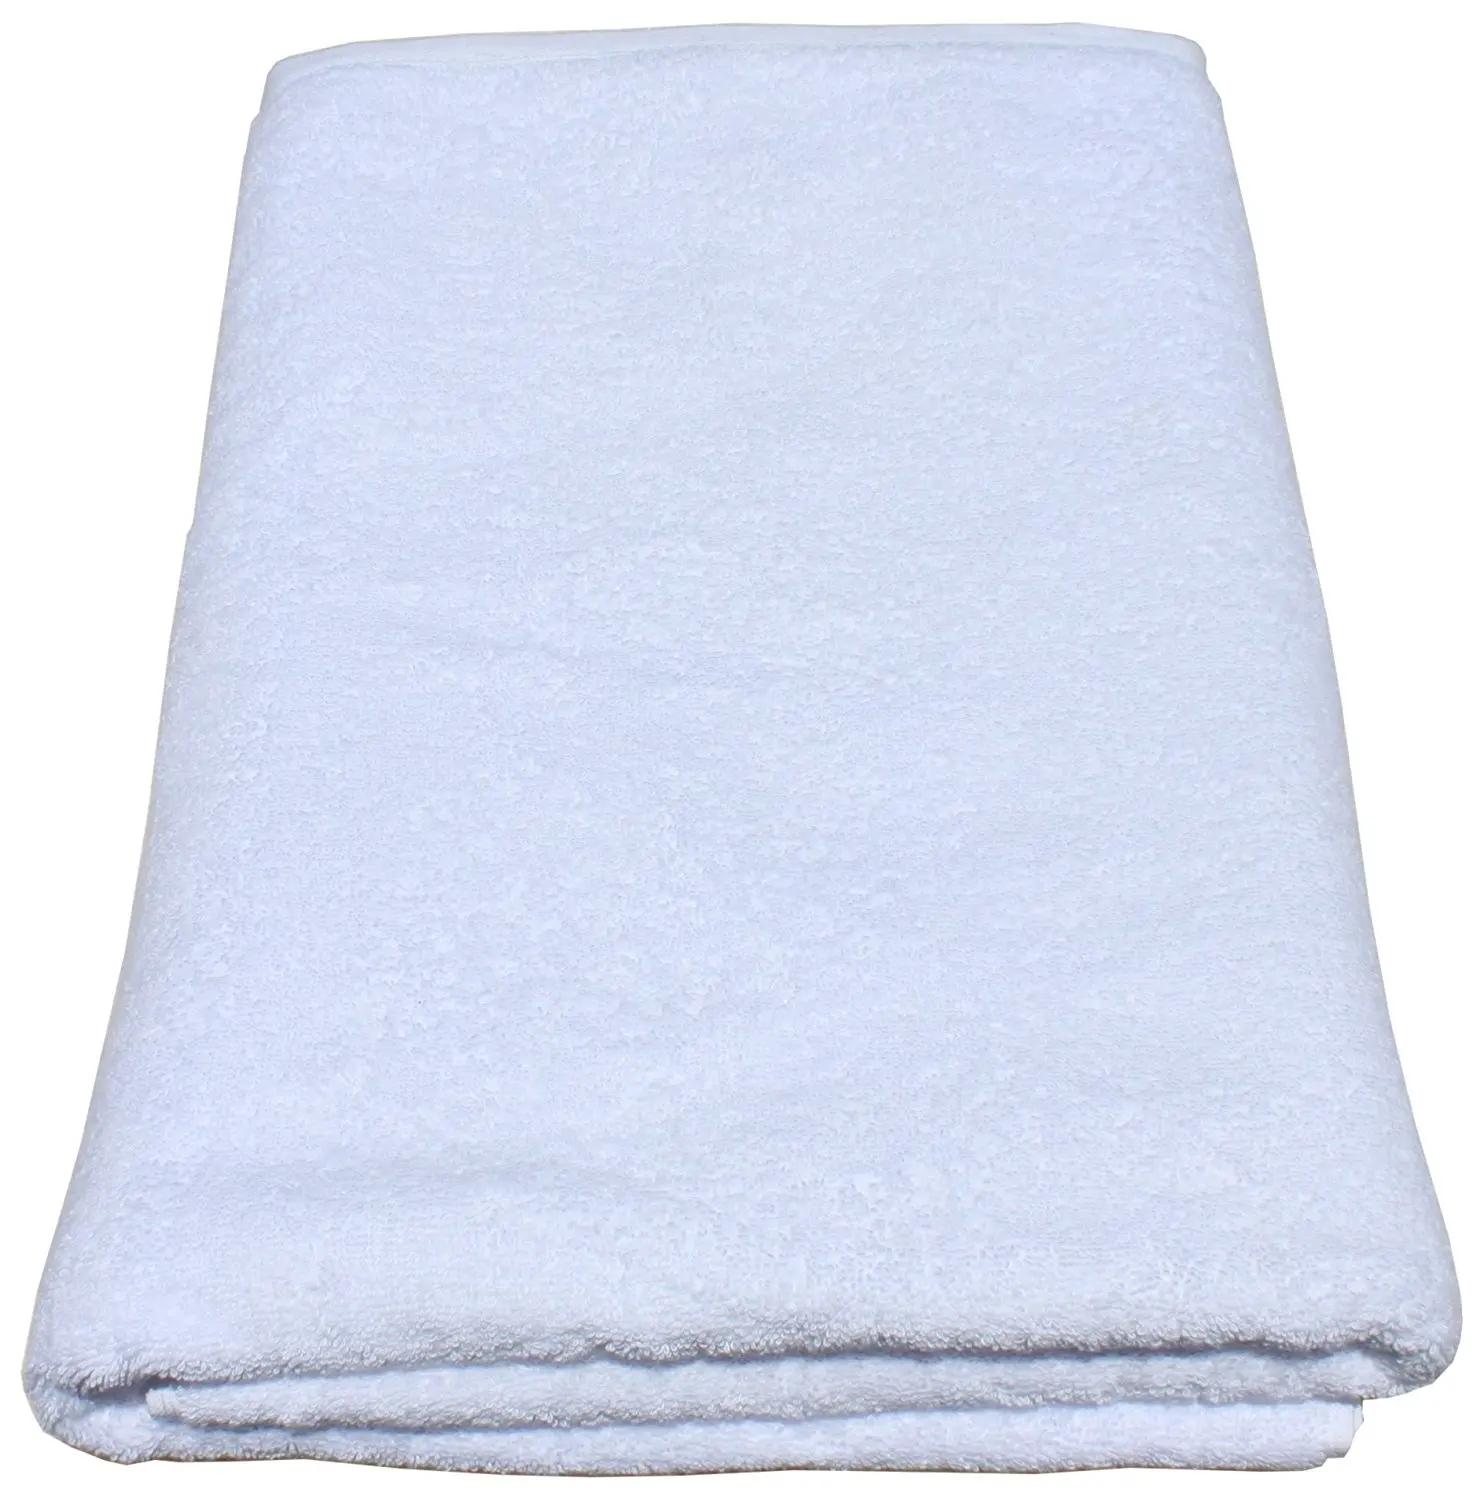 Полотенце весит. Вес полотенца для тела. Сколько весит полотенце 100 на 20.